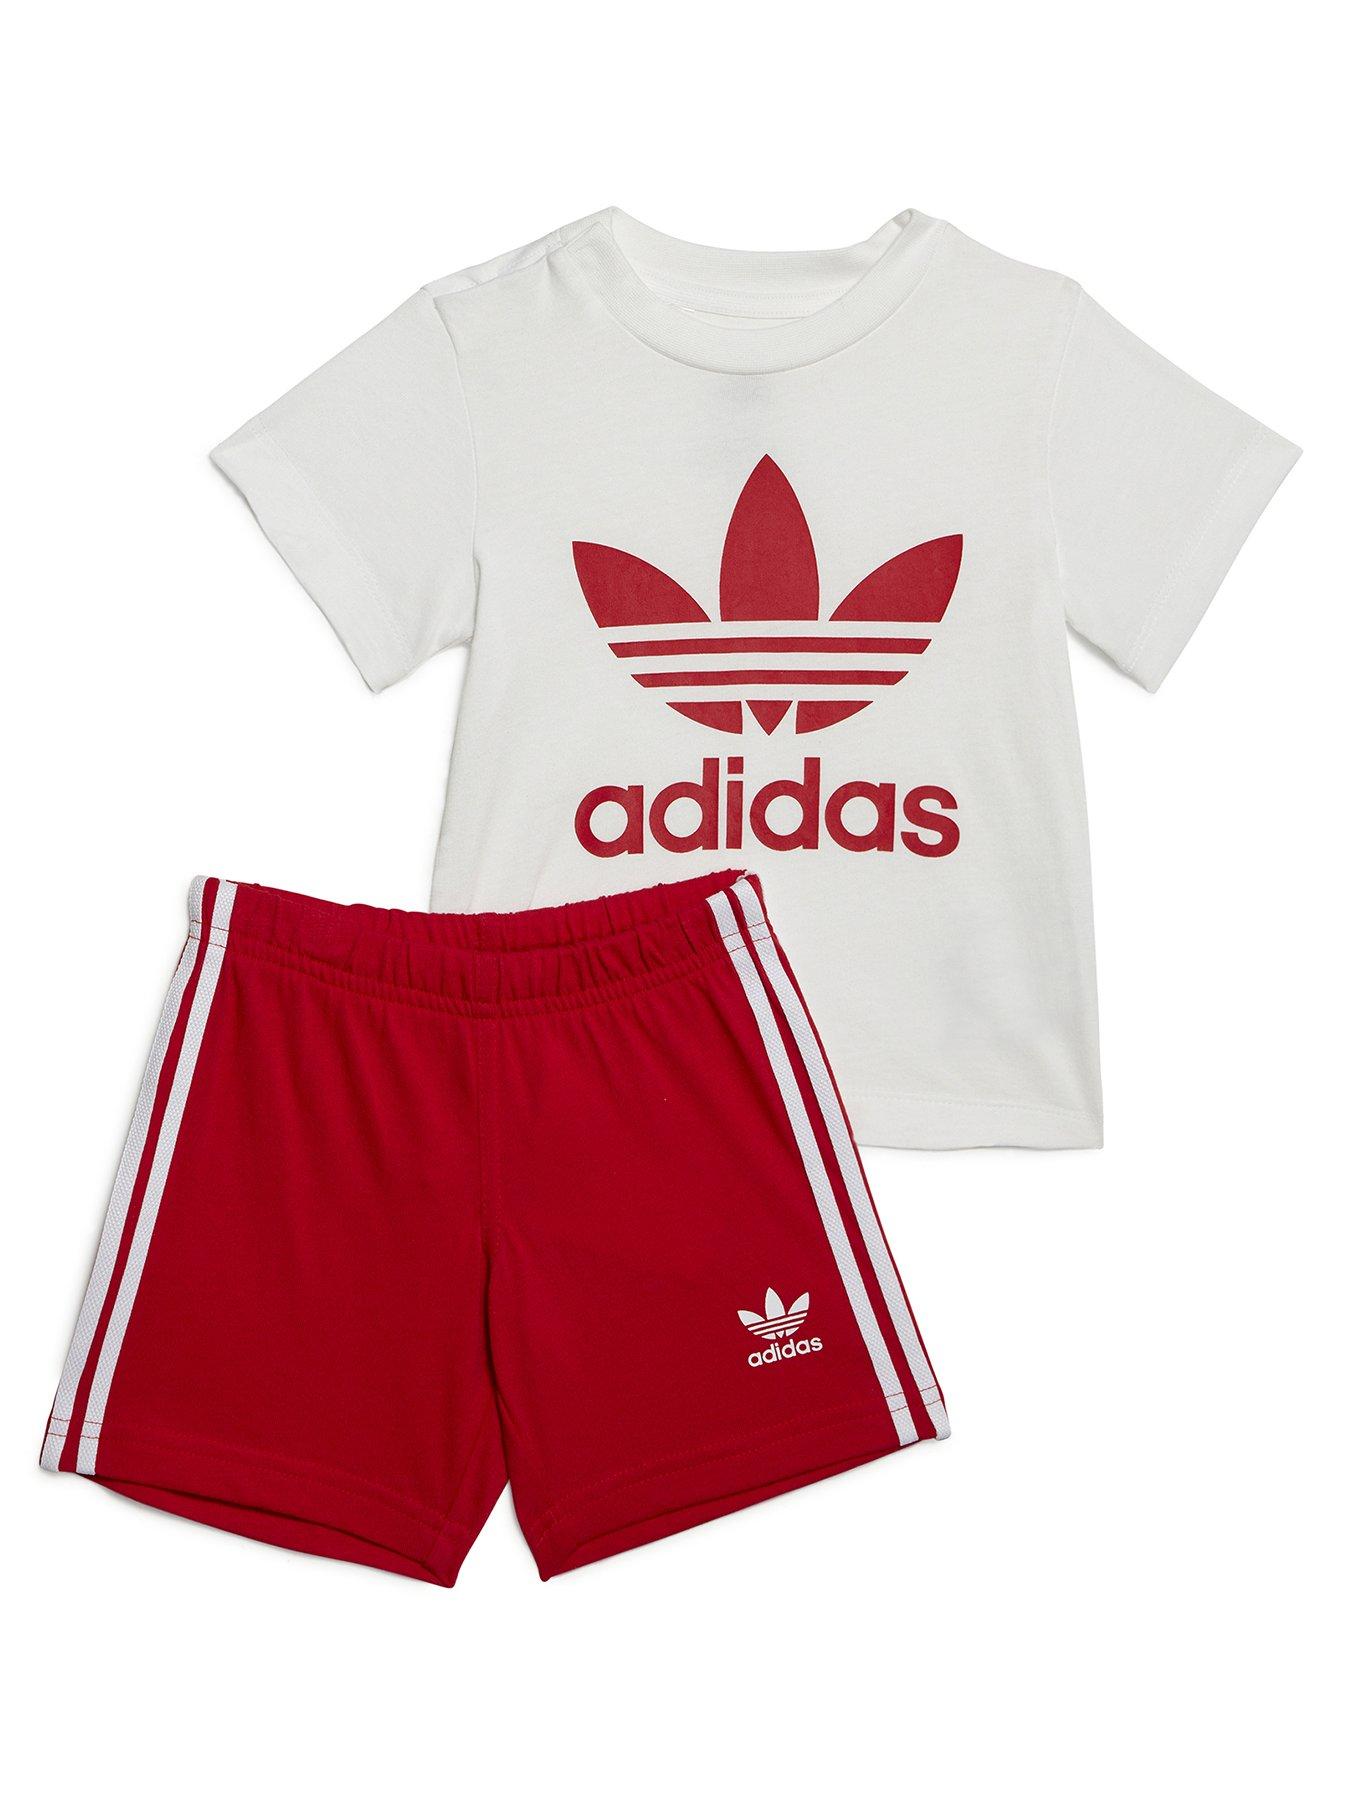 adidas Originals Infant Adicolor Short & Tee Set - Red/White | very.co.uk